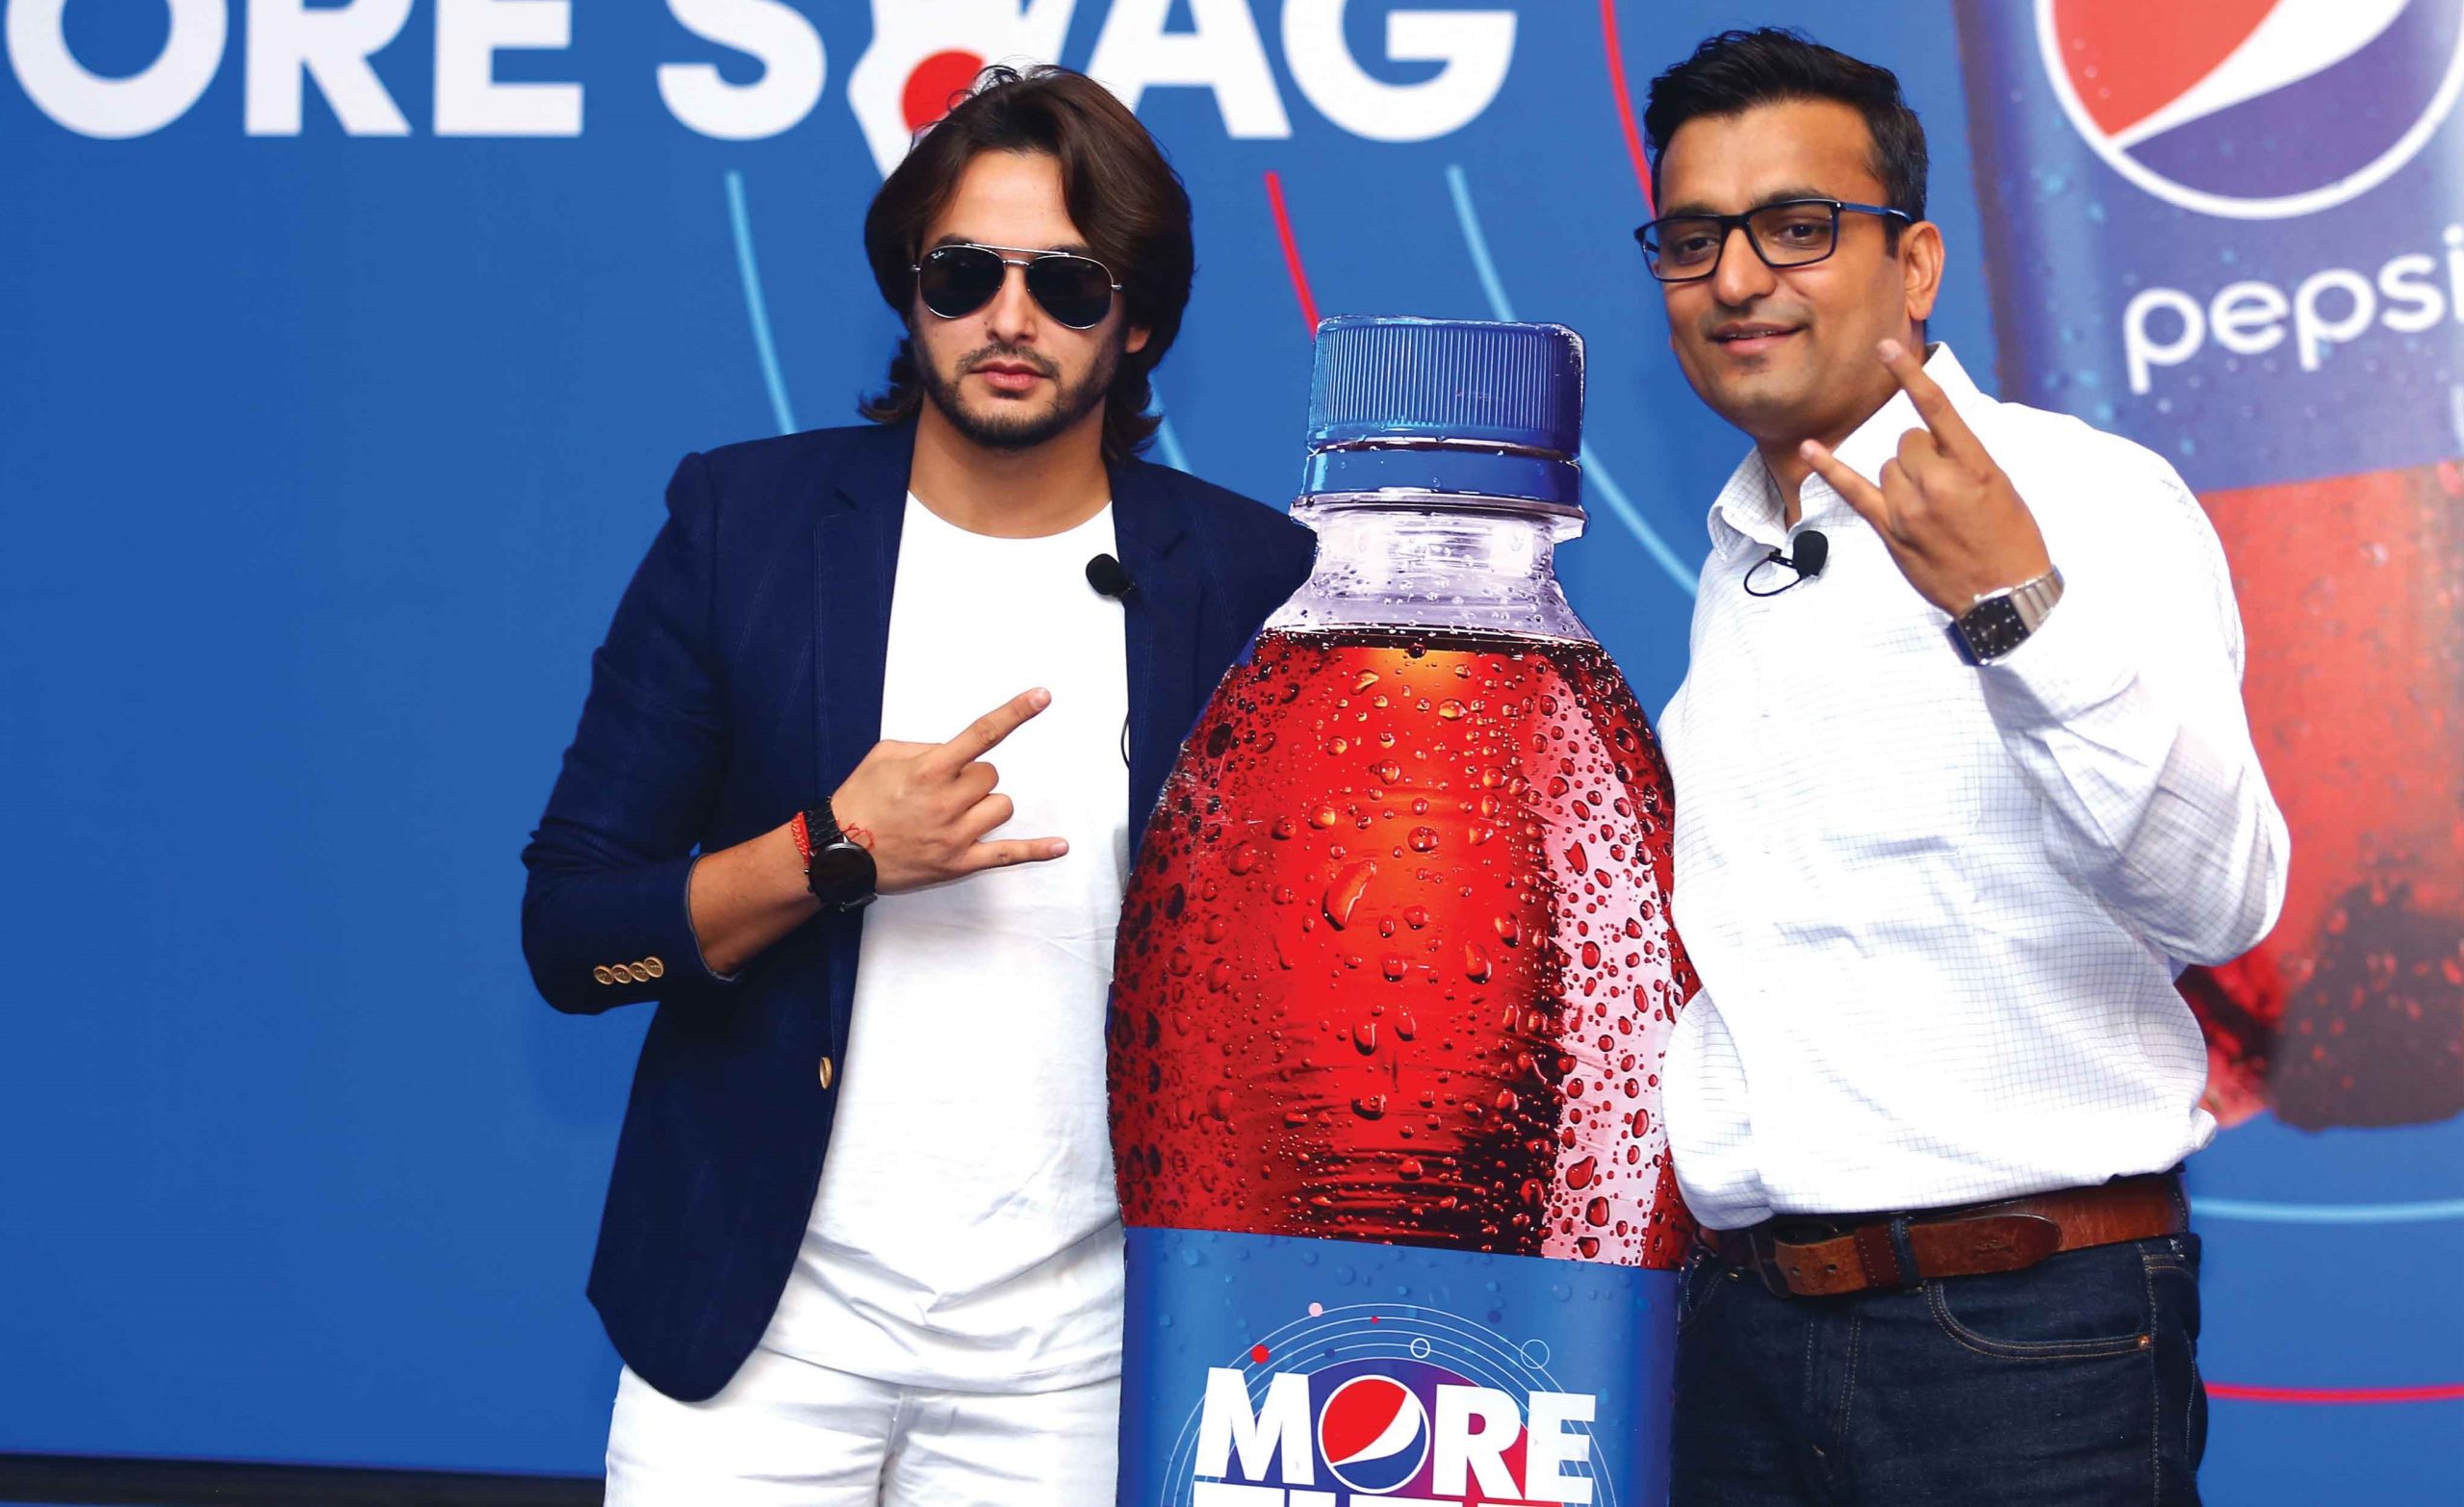 Pepsico launches the new ‘MORE FIZZ’ Pepsi in NEPAL